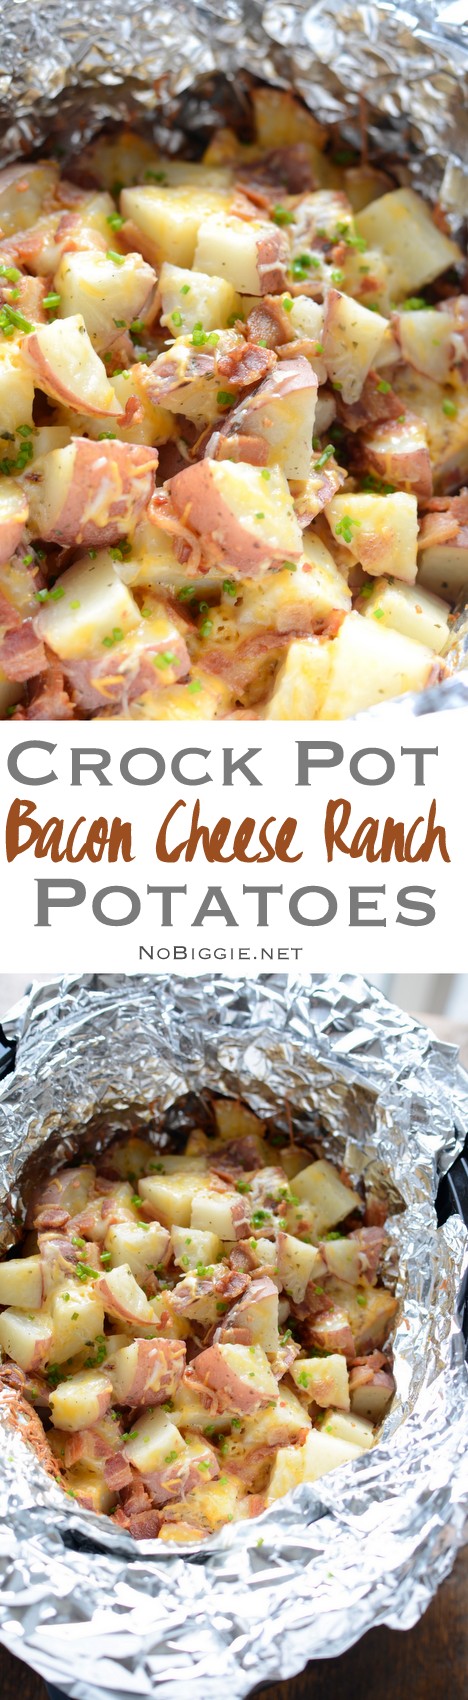 Crock Pot Bacon Cheese Ranch Potatoes